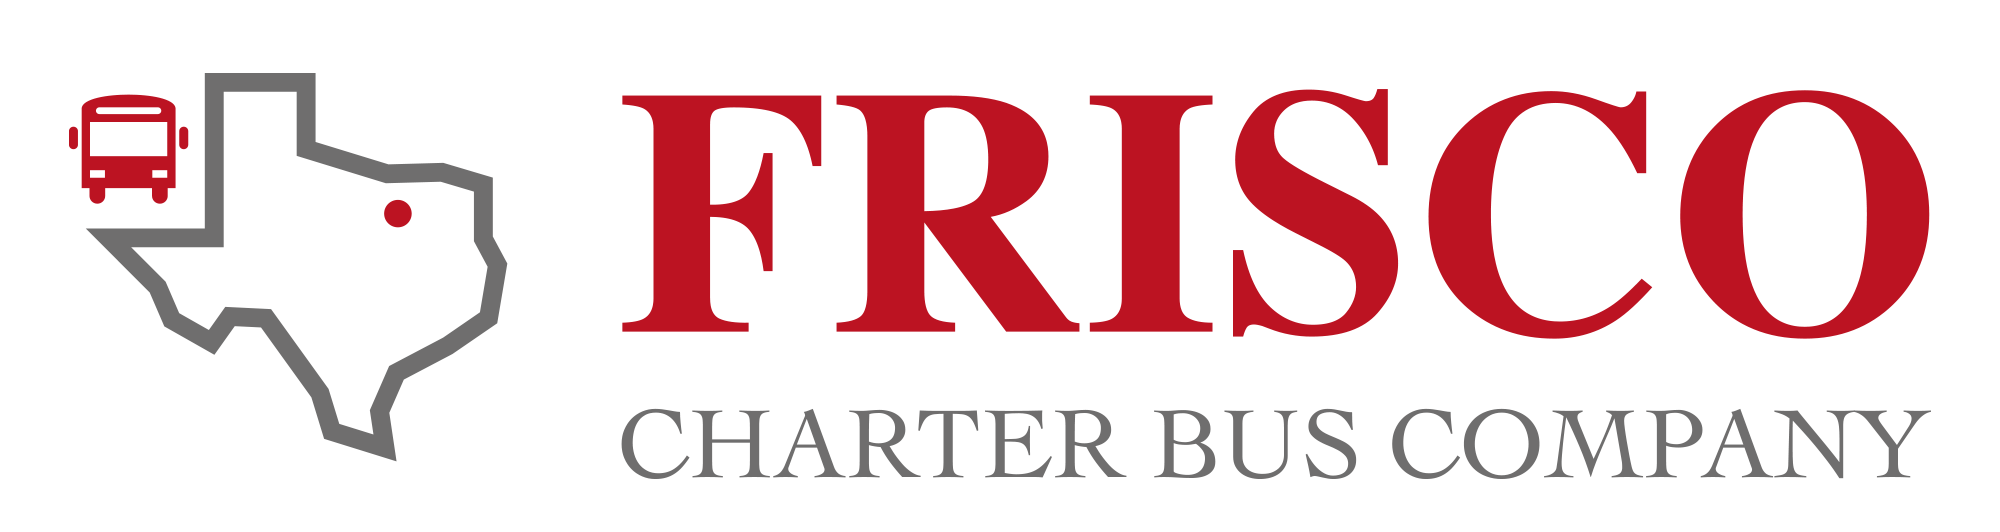 Frisco Charter Bus Company